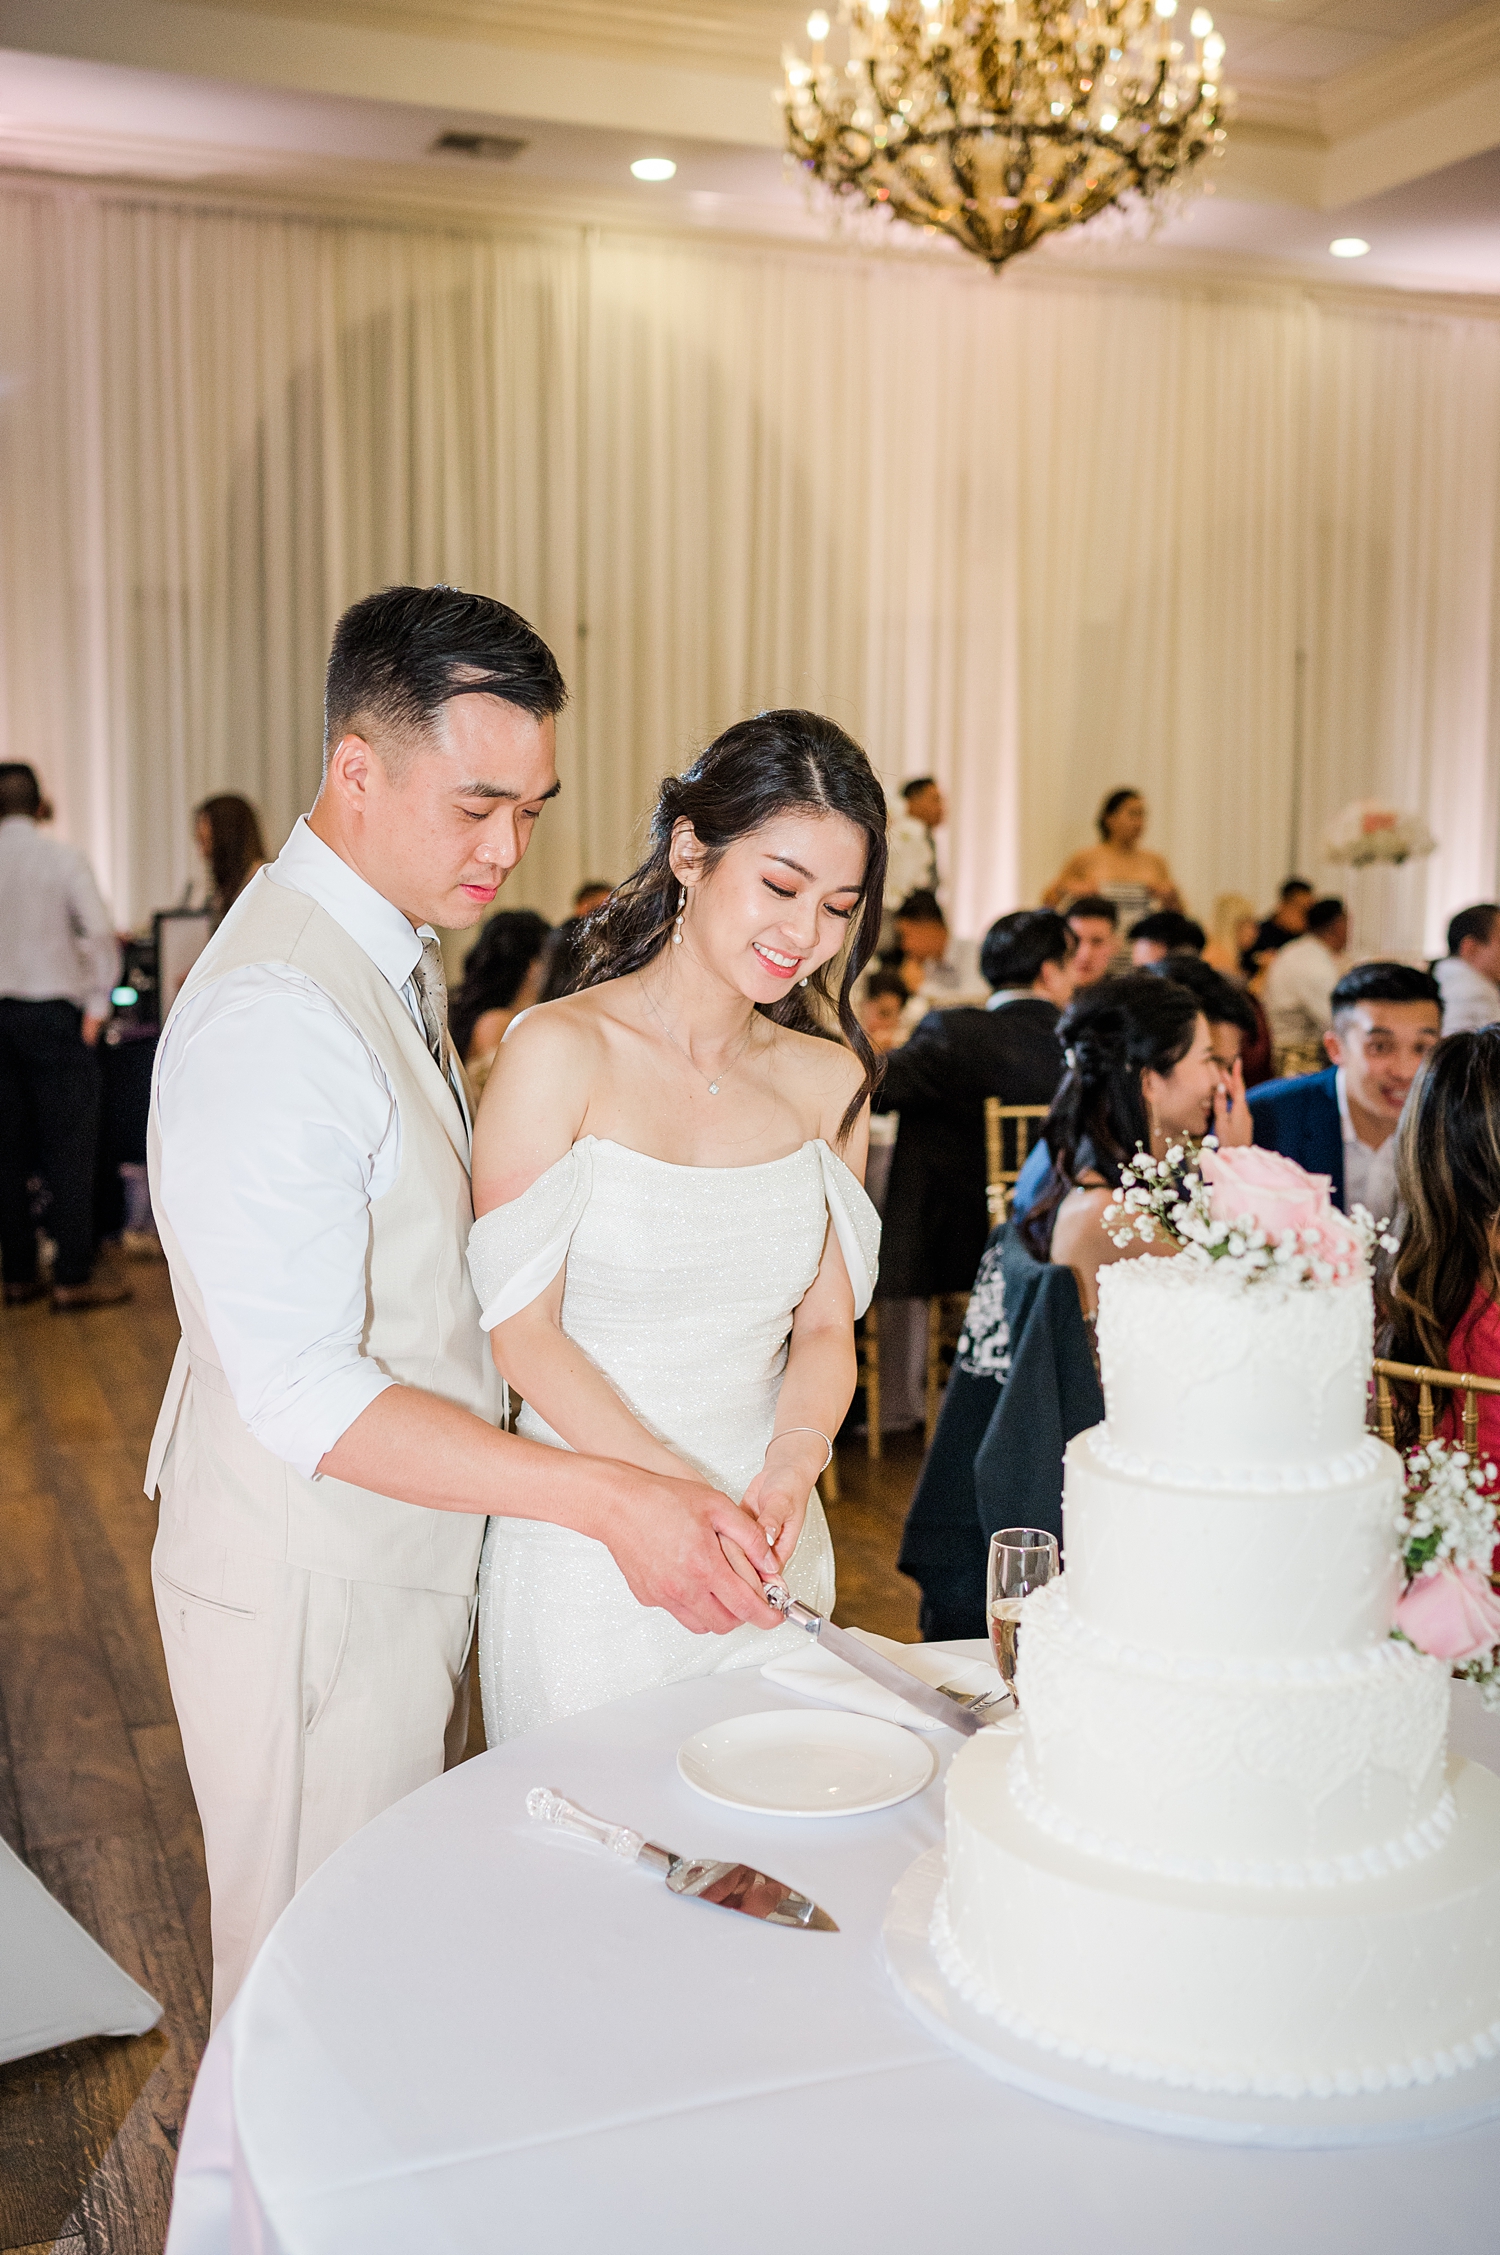 Chinese Tea Ceremony | Romantic Garden Wedding | OC Wedding Photographer | The Villa Westminster-129| Nataly Hernandez Photography | Diana + Byron.jpg